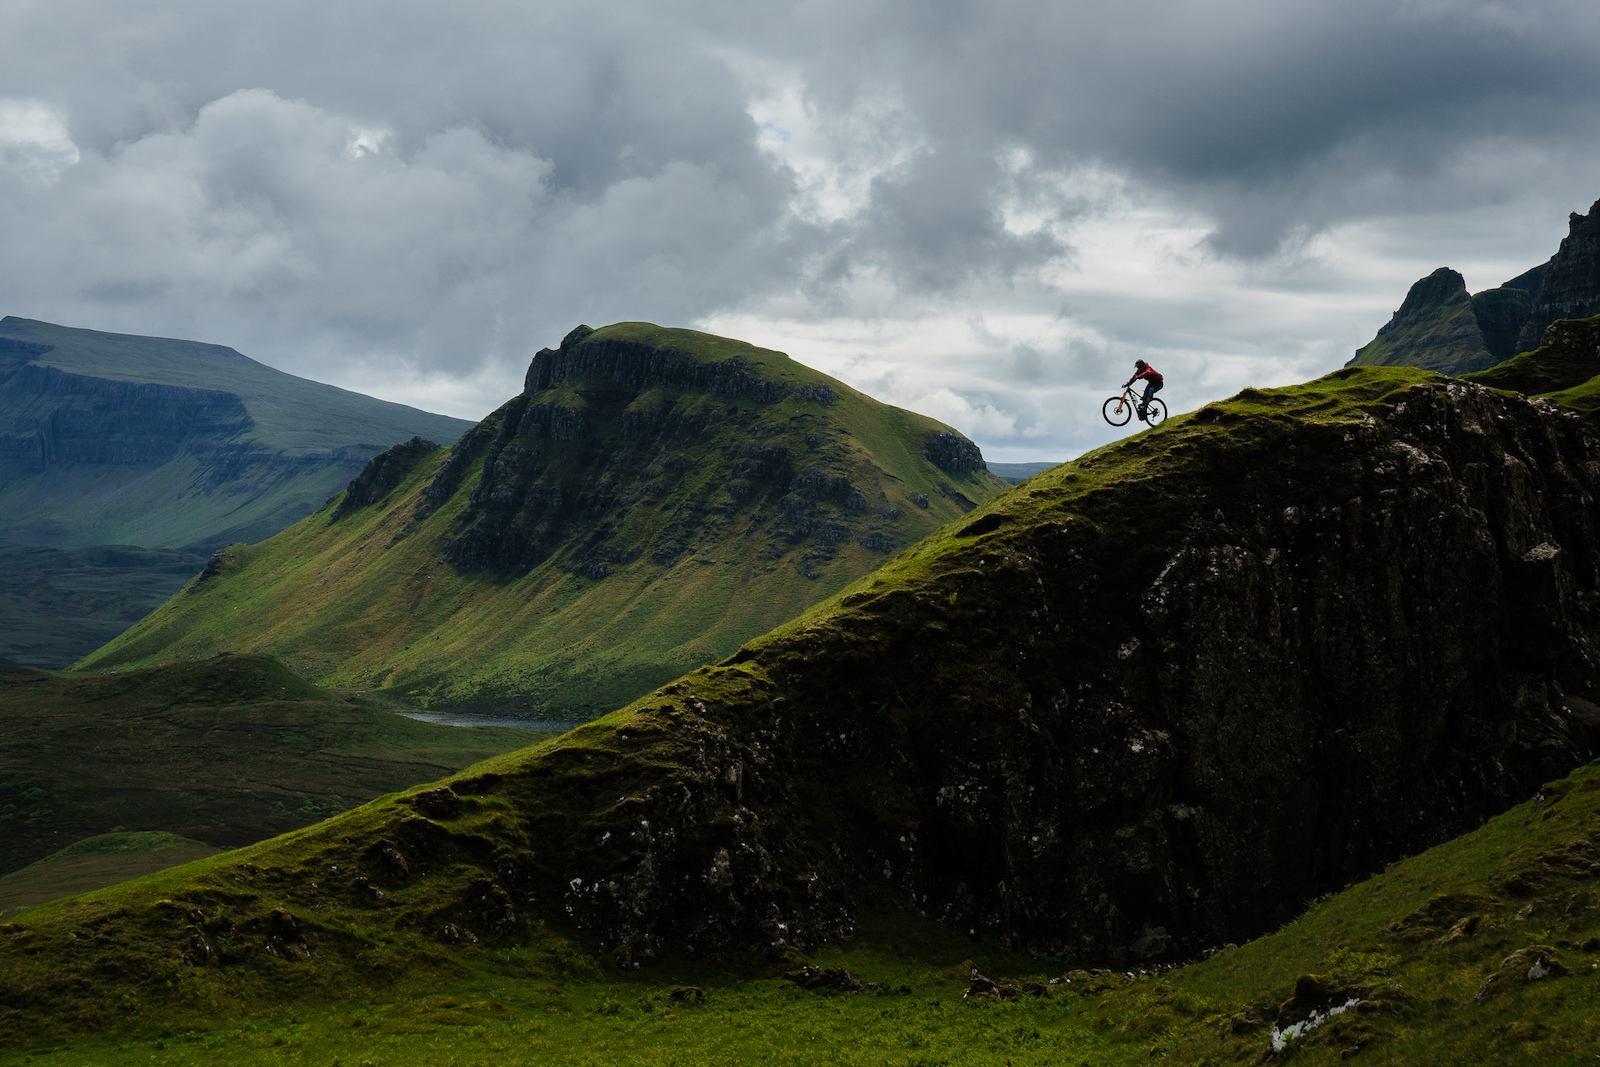 Greg Callaghan on Skye in Scotland, June 2017. Photo by Matt Wragg